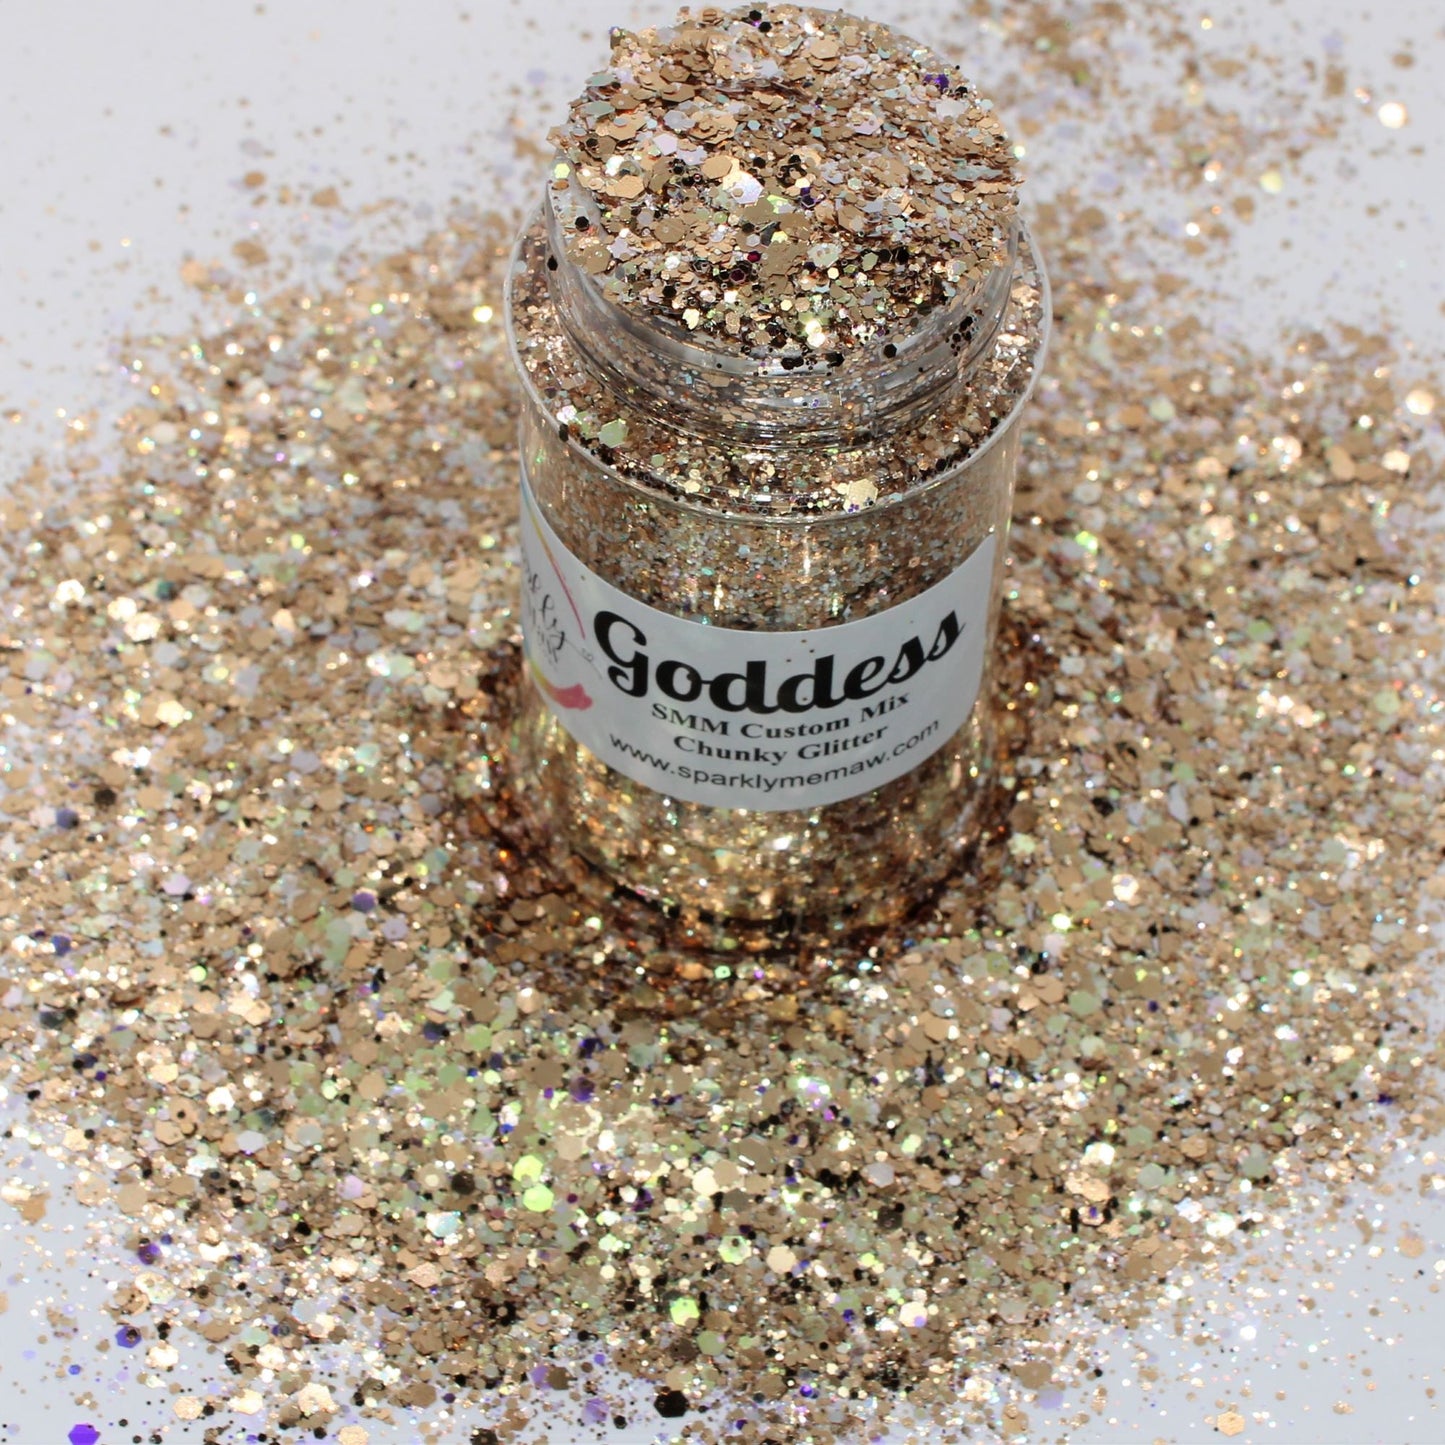 Goddess SMM custom Gold Chunky Glitter Mix